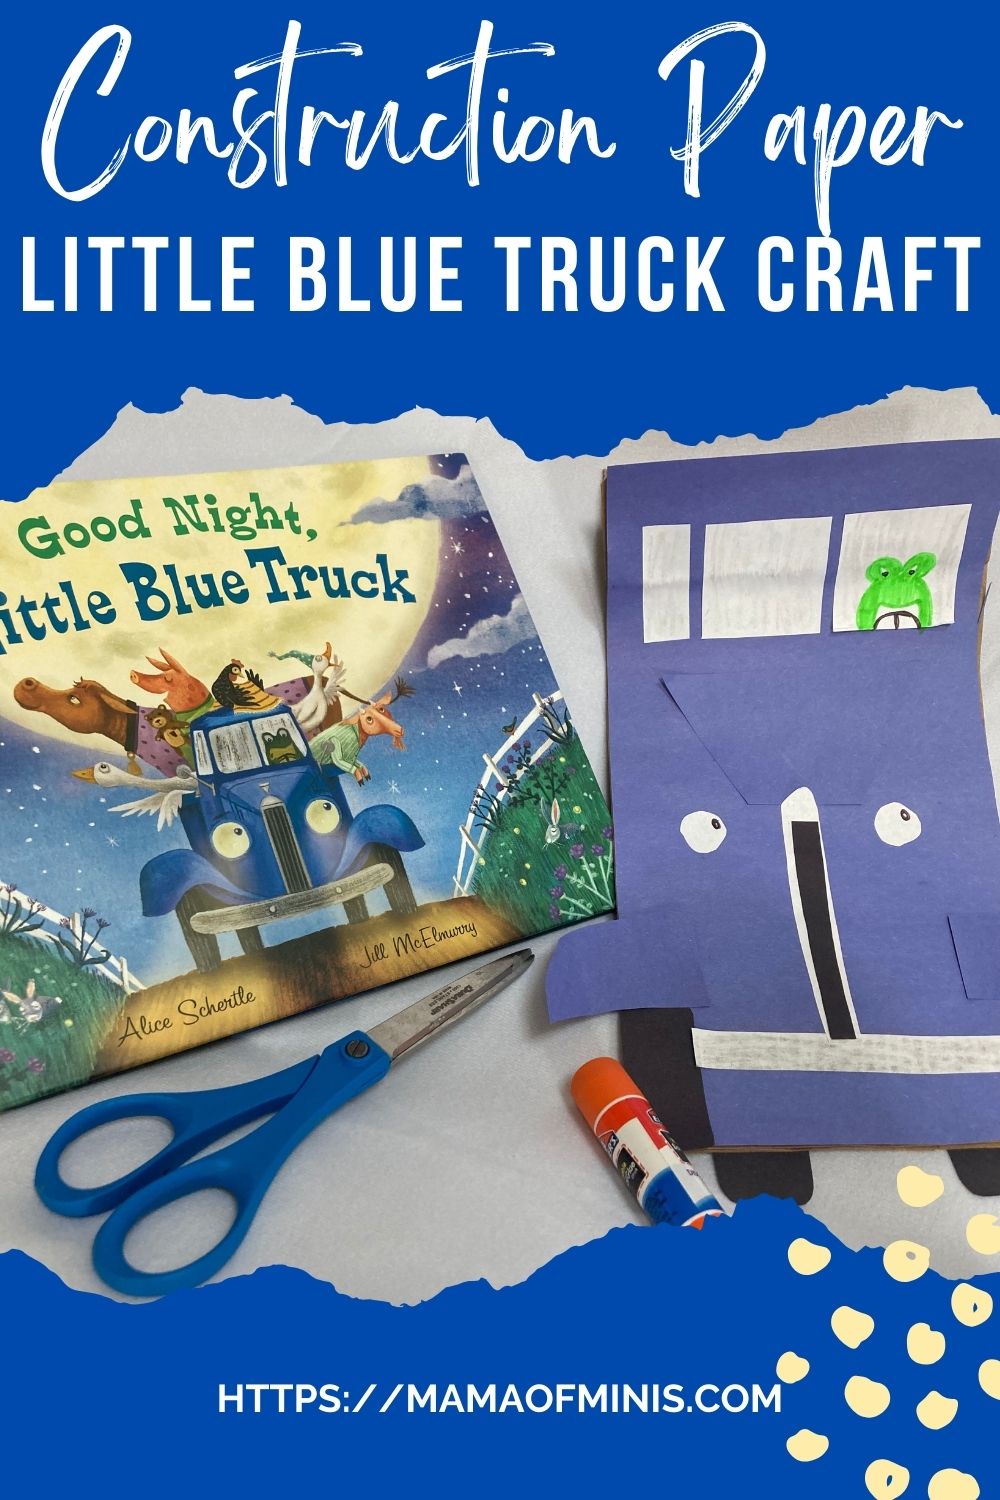 Paper Little Blue Truck Craft for Kids 